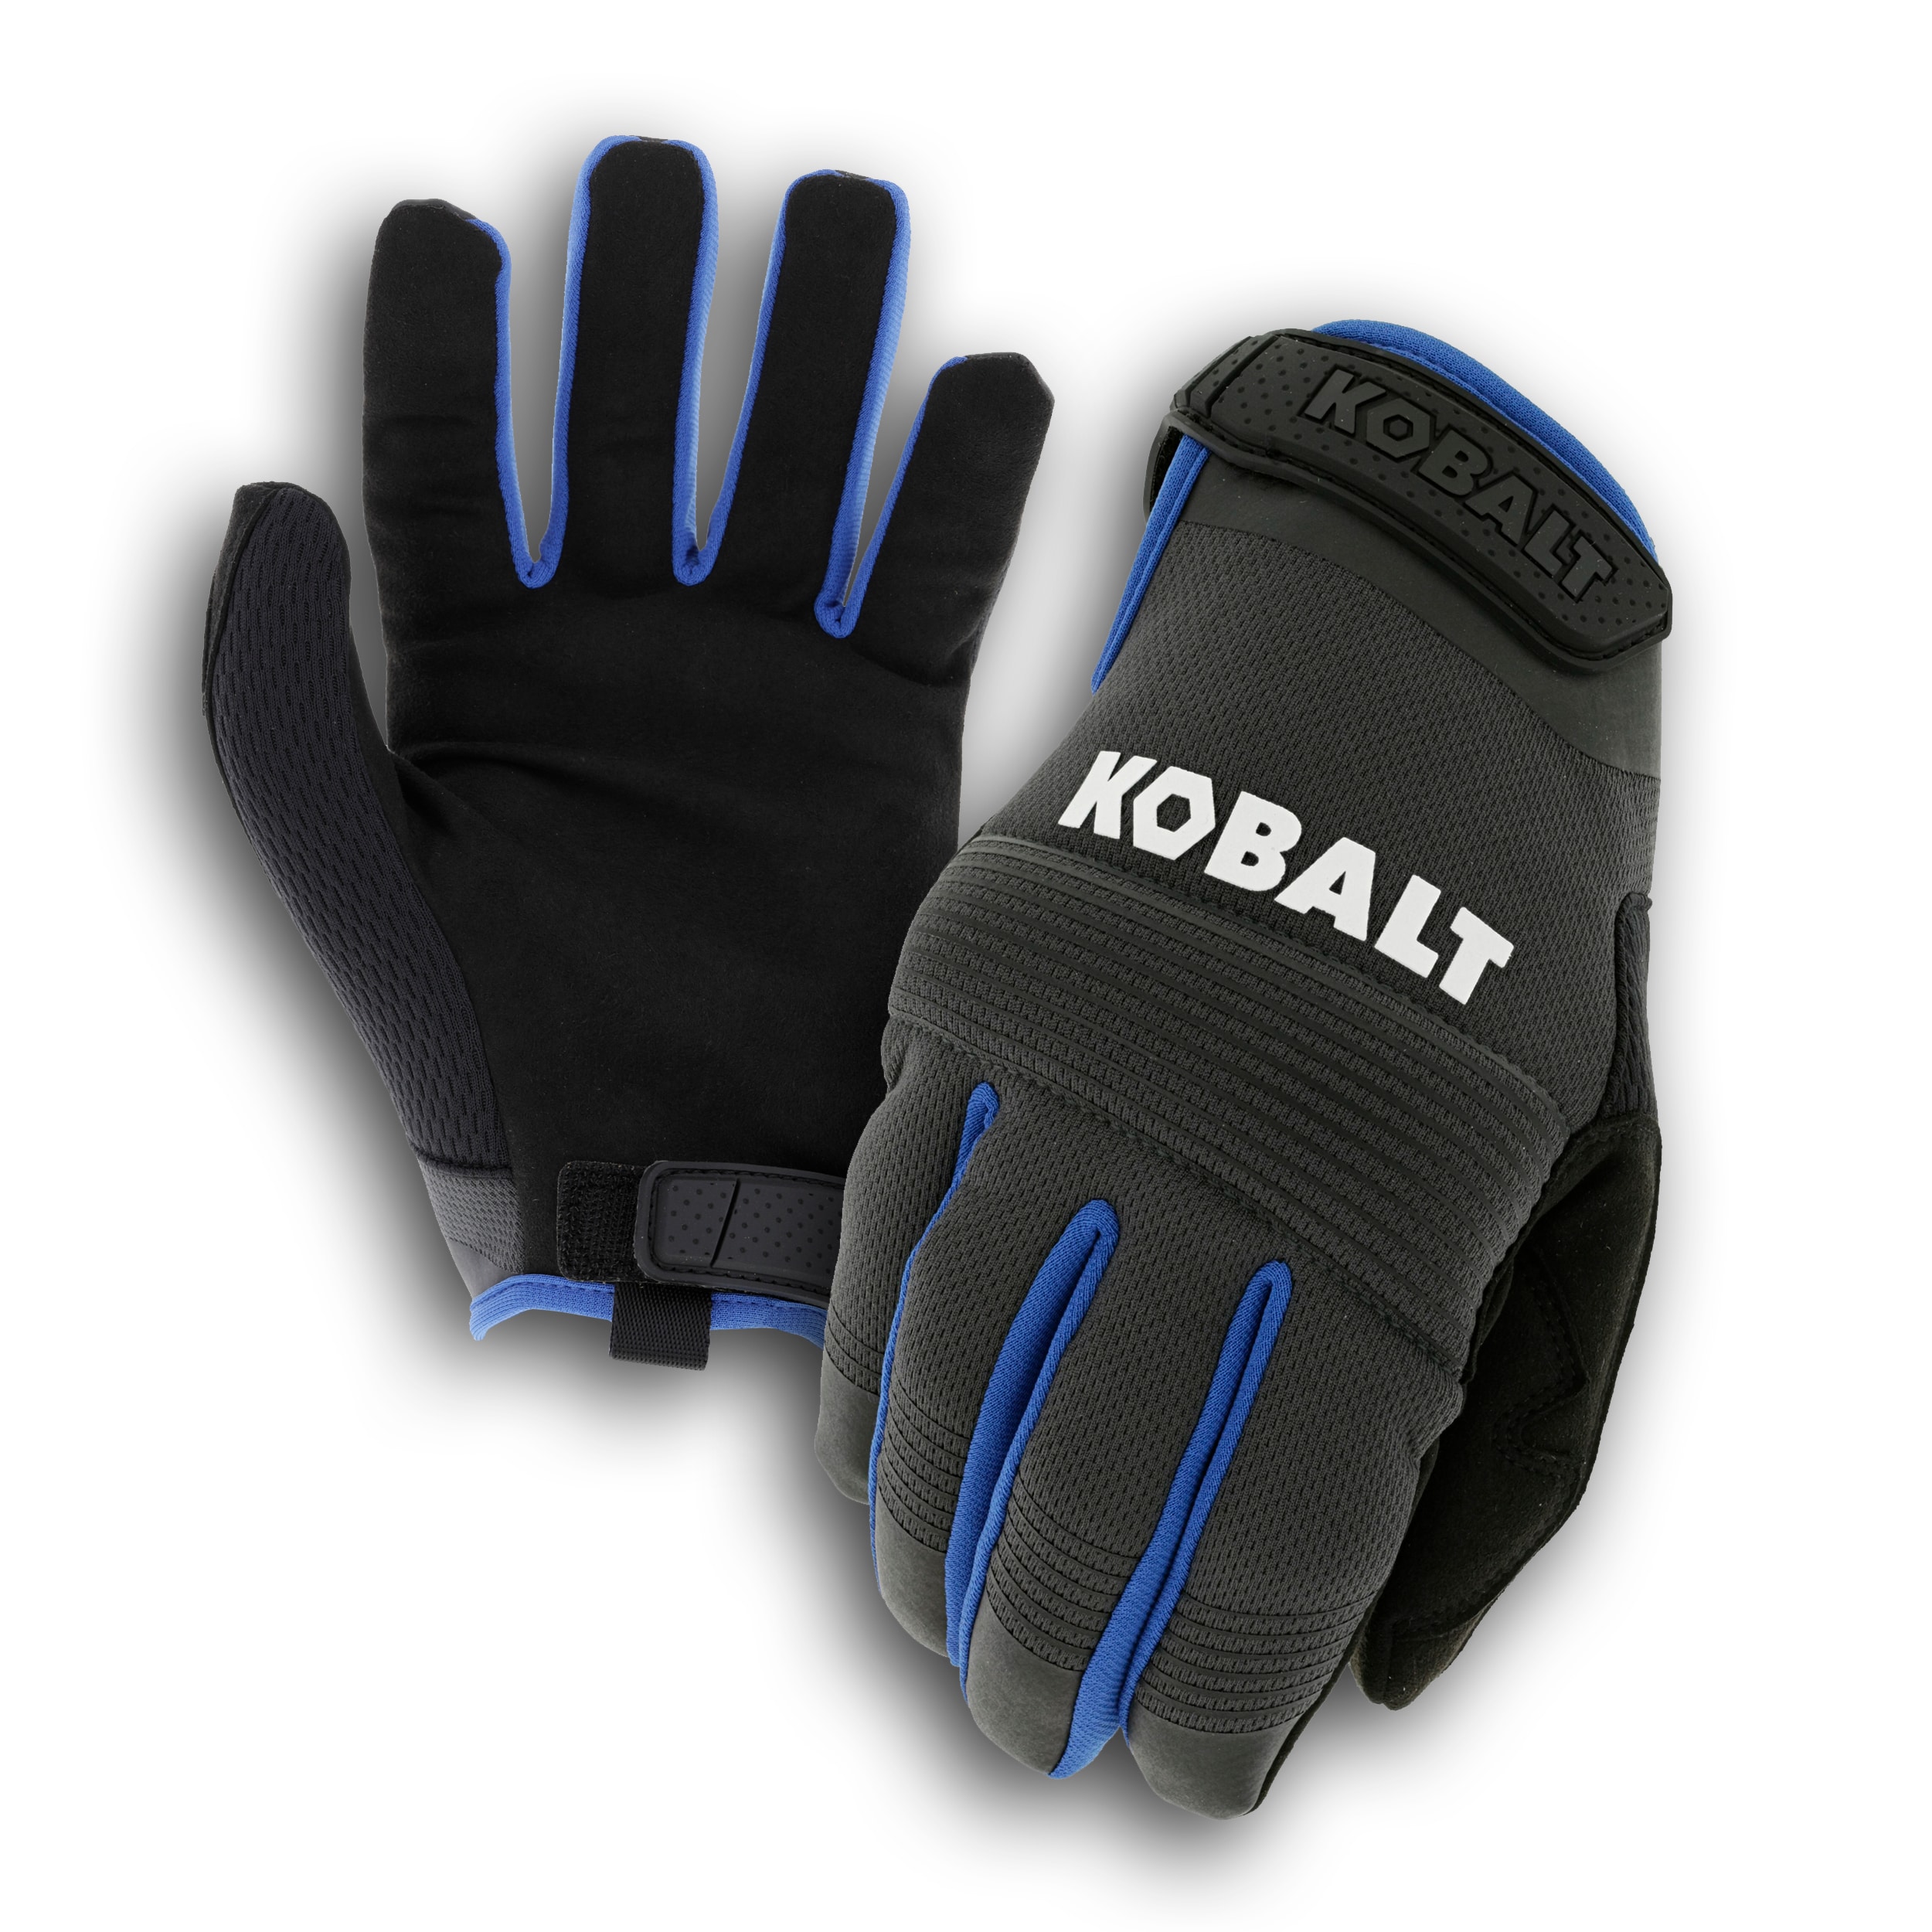 Men's Goatskin Leather Gloves Single Bare Leather Touchscreen